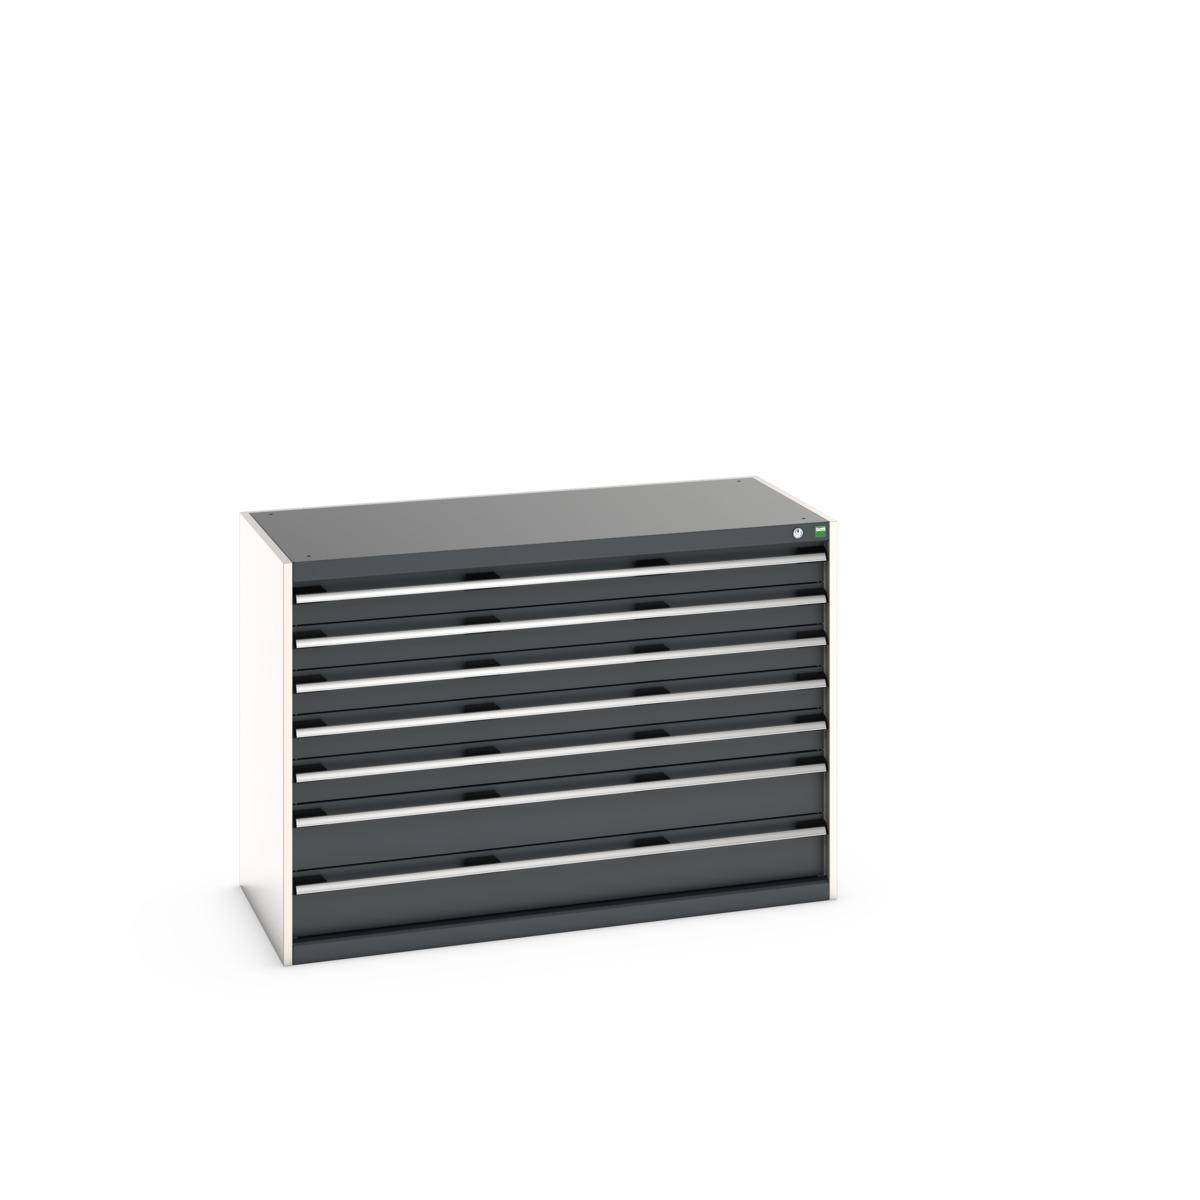 40022118. - cubio drawer cabinet